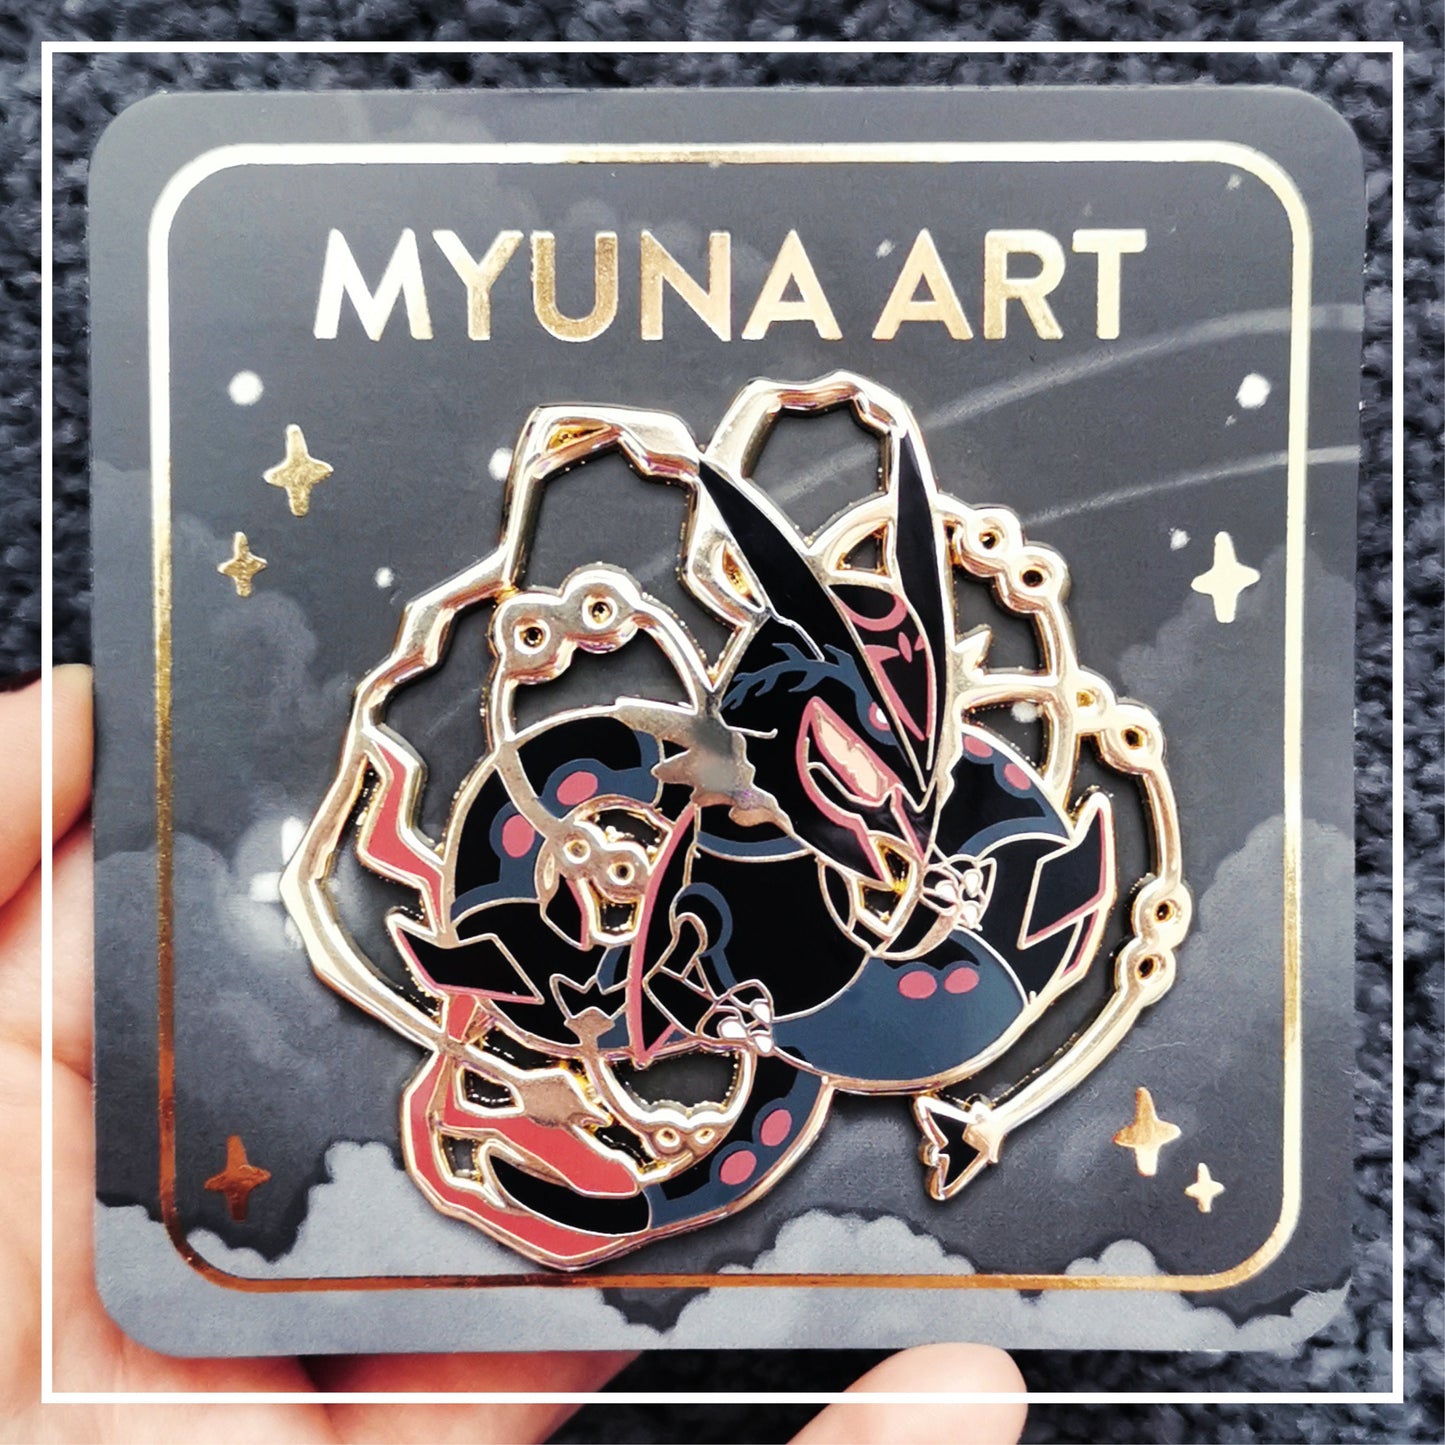 Myuna's XXL Shiny Mega Rayquaza Pin – Big Fanart Sky Dragon Legendary Hard Enamel Pin with 4 pinback posts